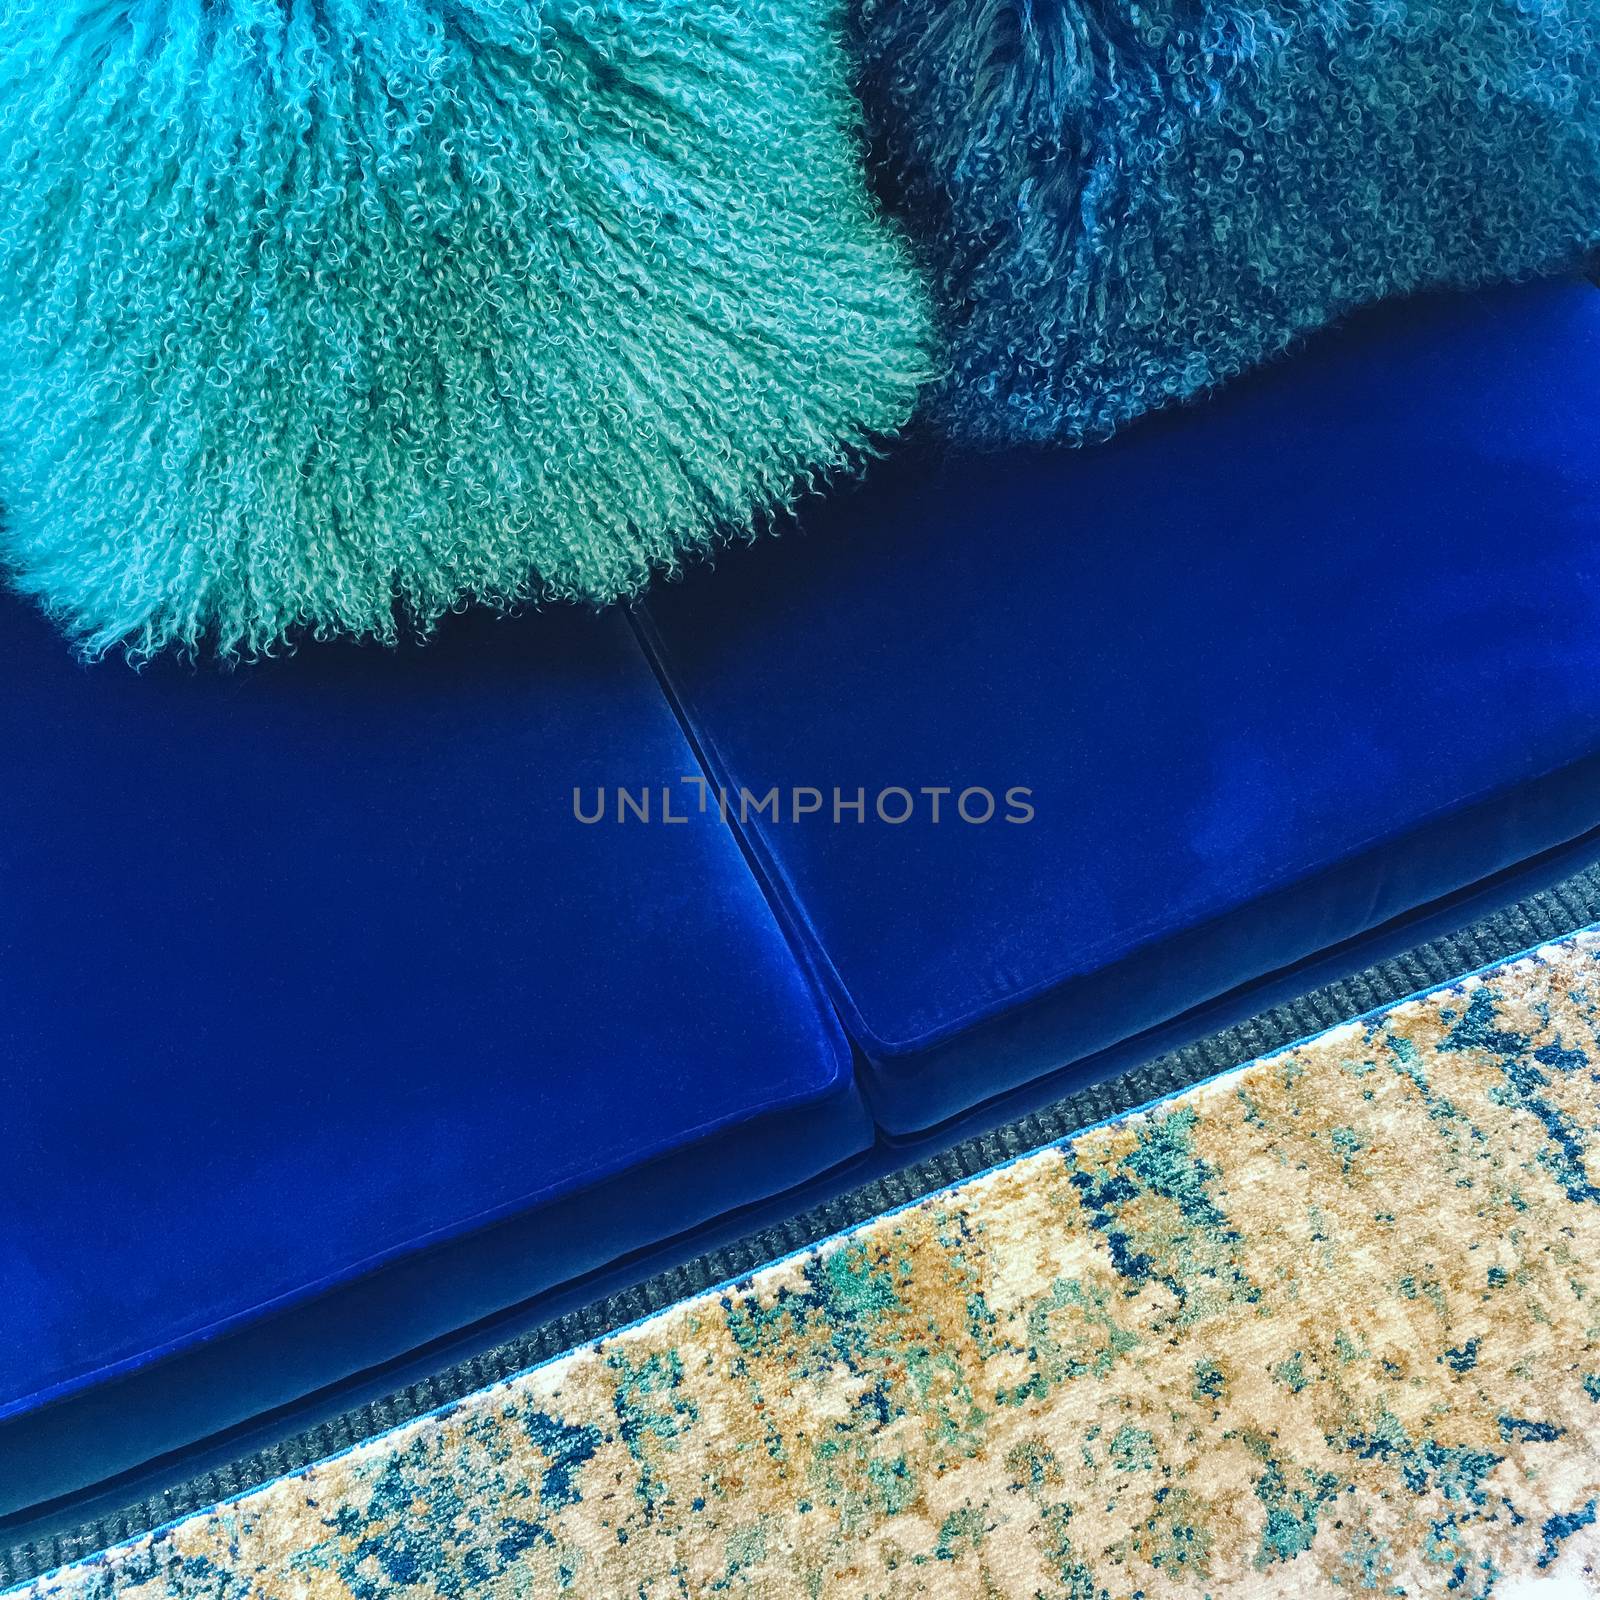 Luxurious sheepskin cushions decorating a blue velvet sofa.